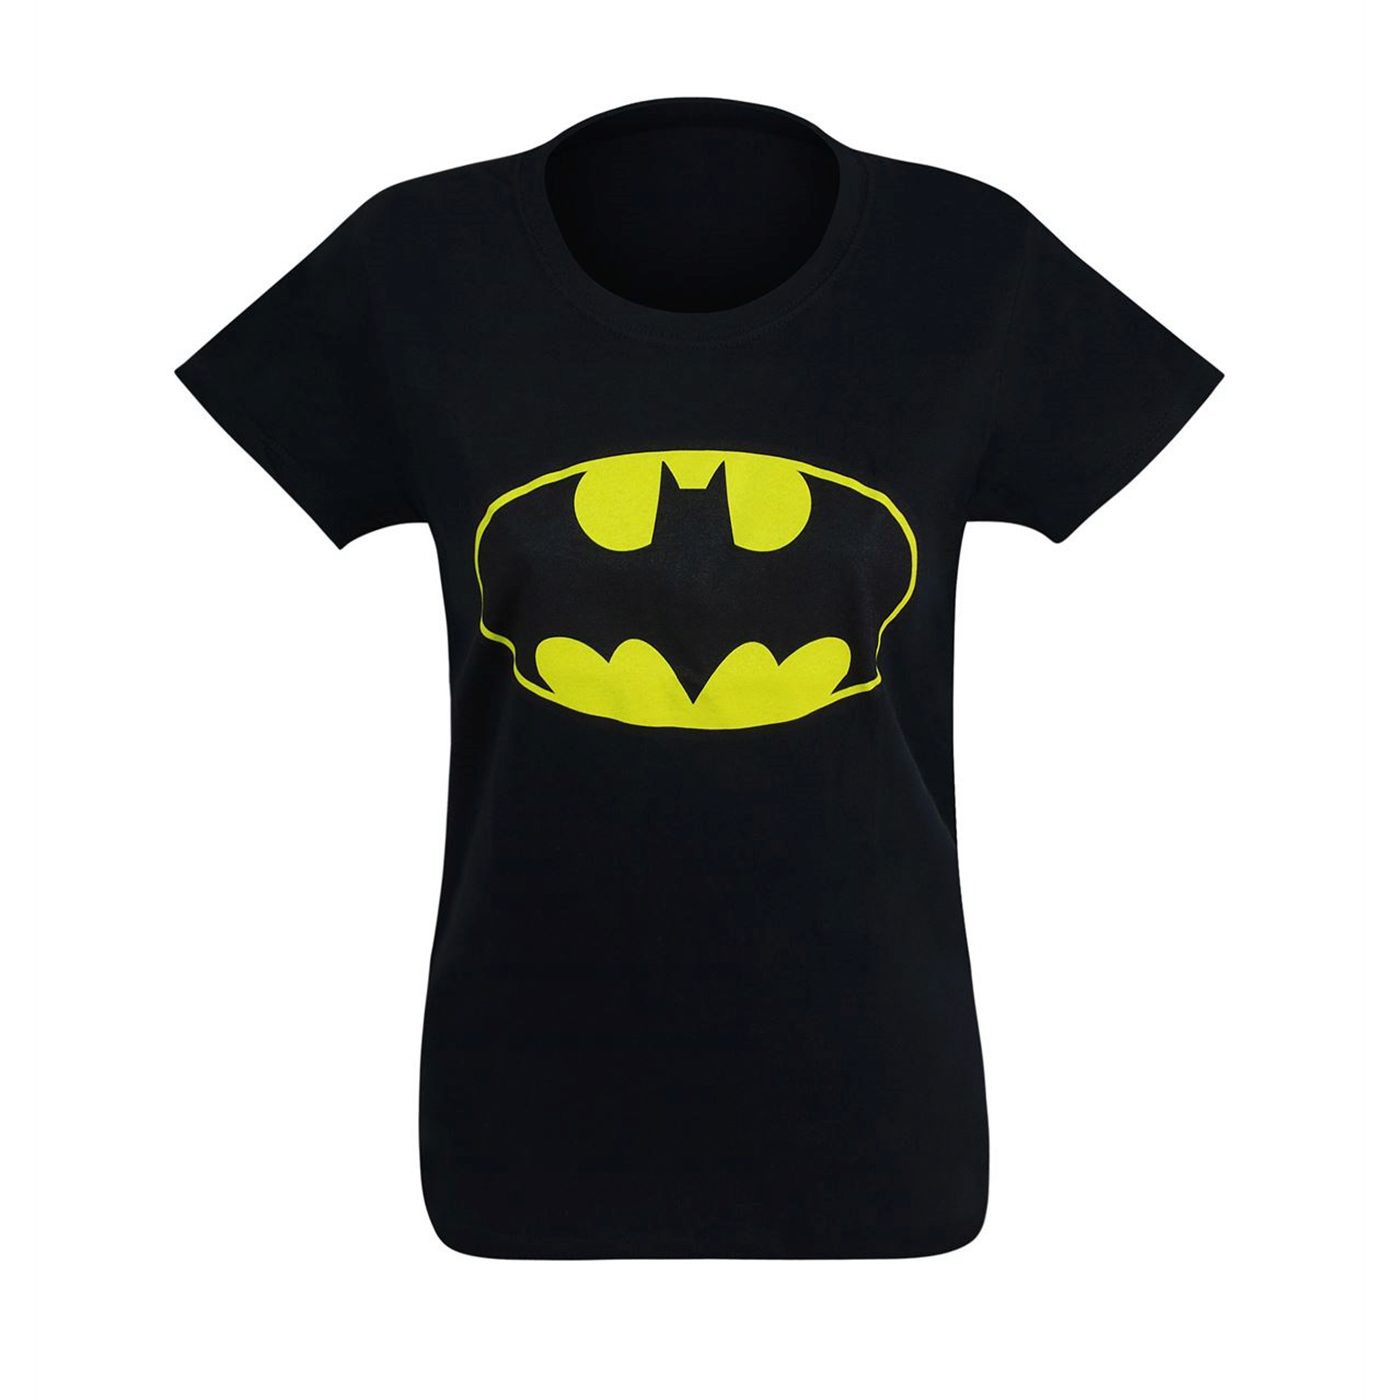 Women's Batman Symbol T-Shirt